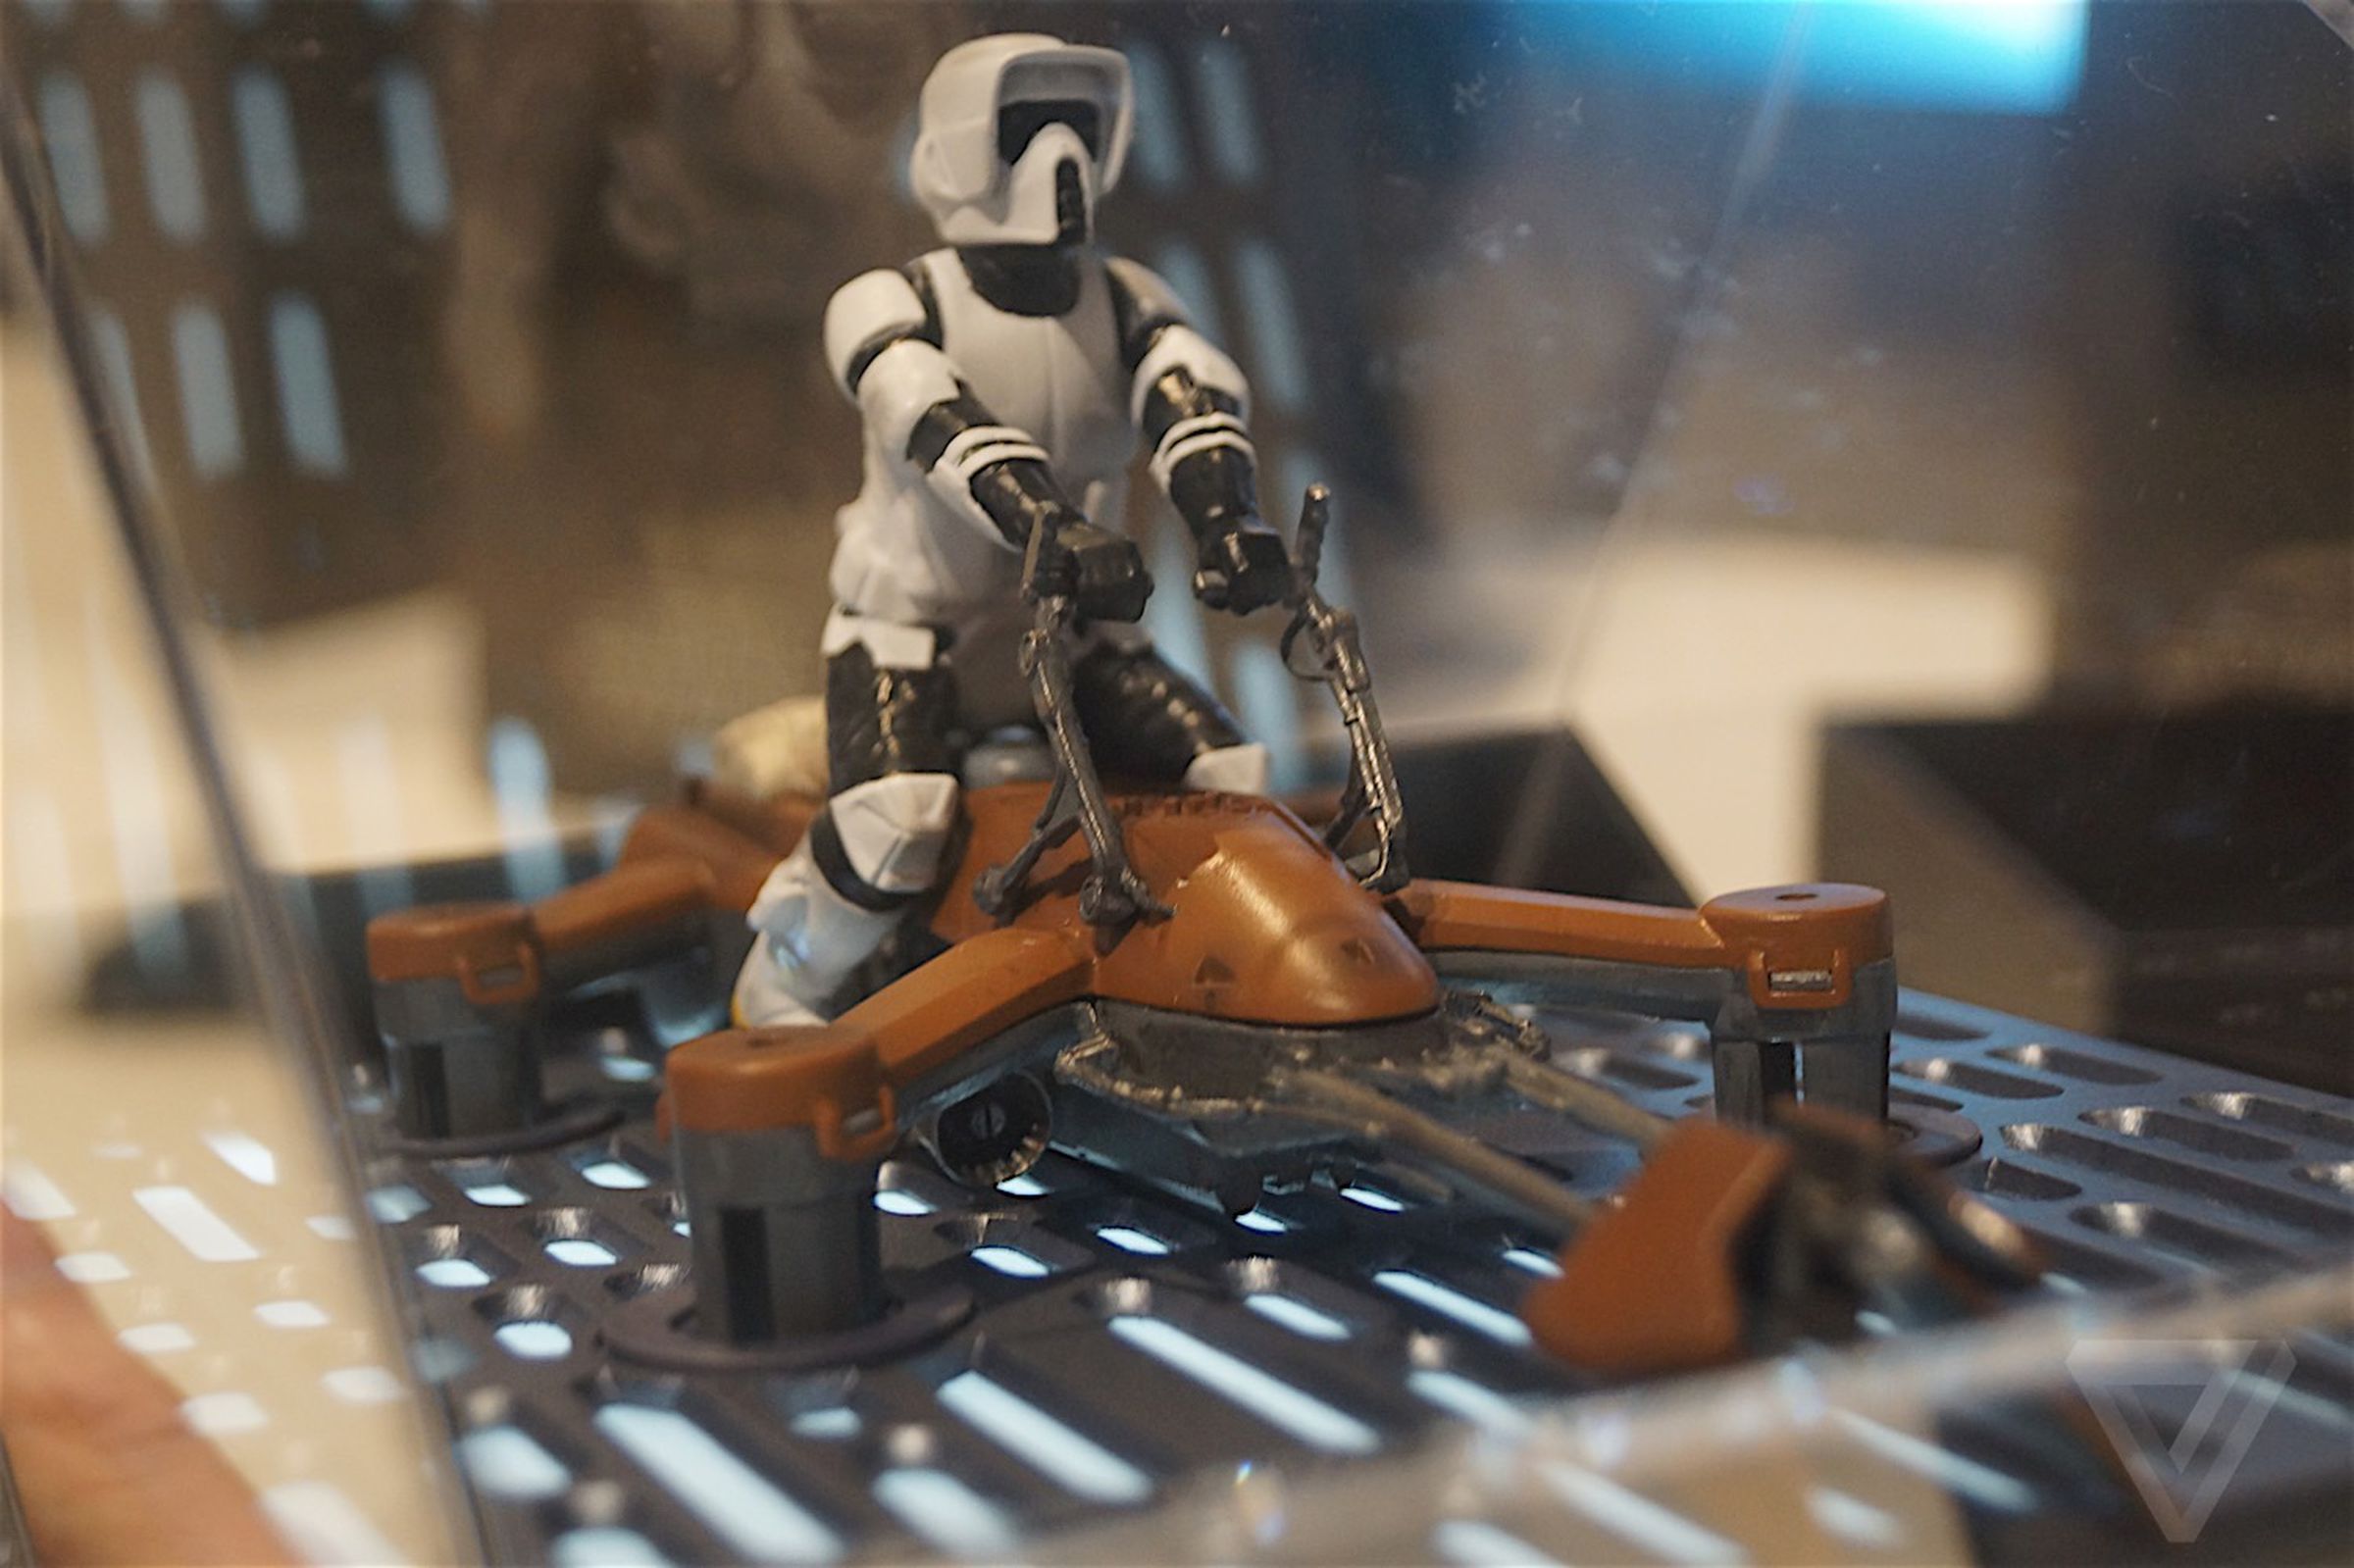 Propel's Star Wars battle quads